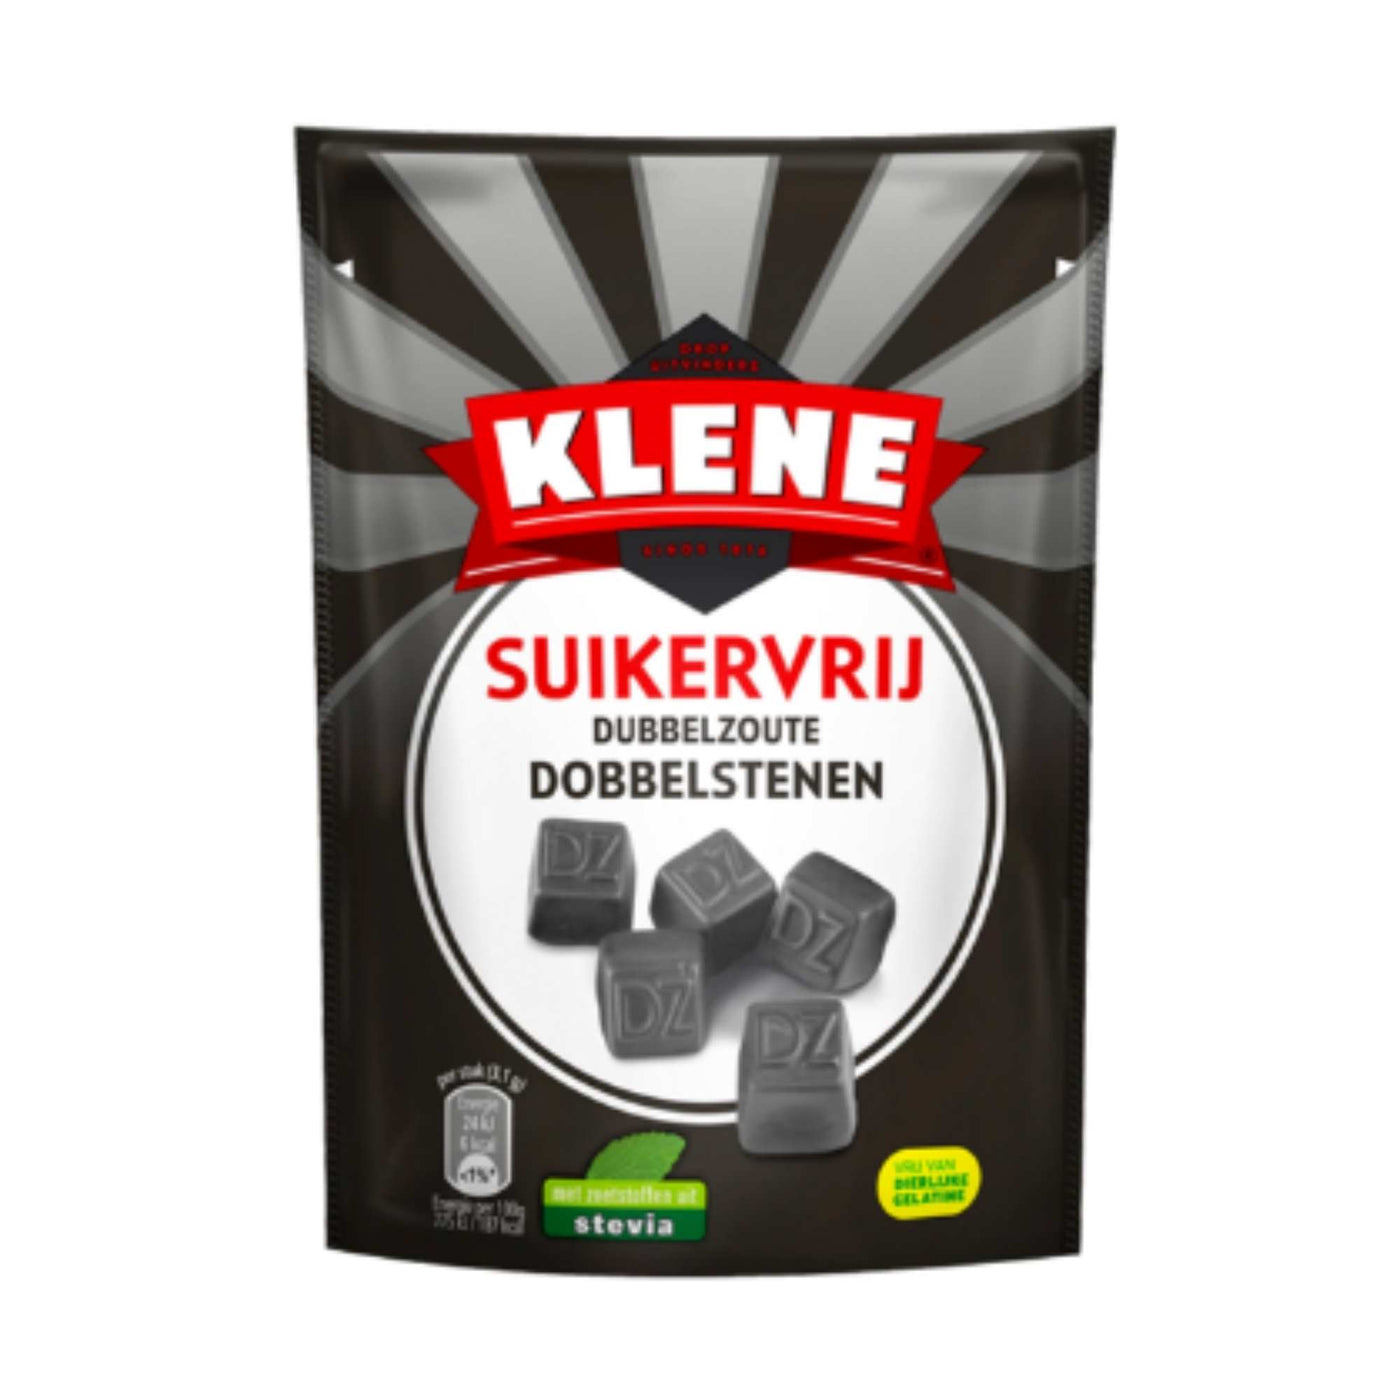 Klene Dobbelstenen - Sugar Free Double Salt Dutch Liquorice Dice